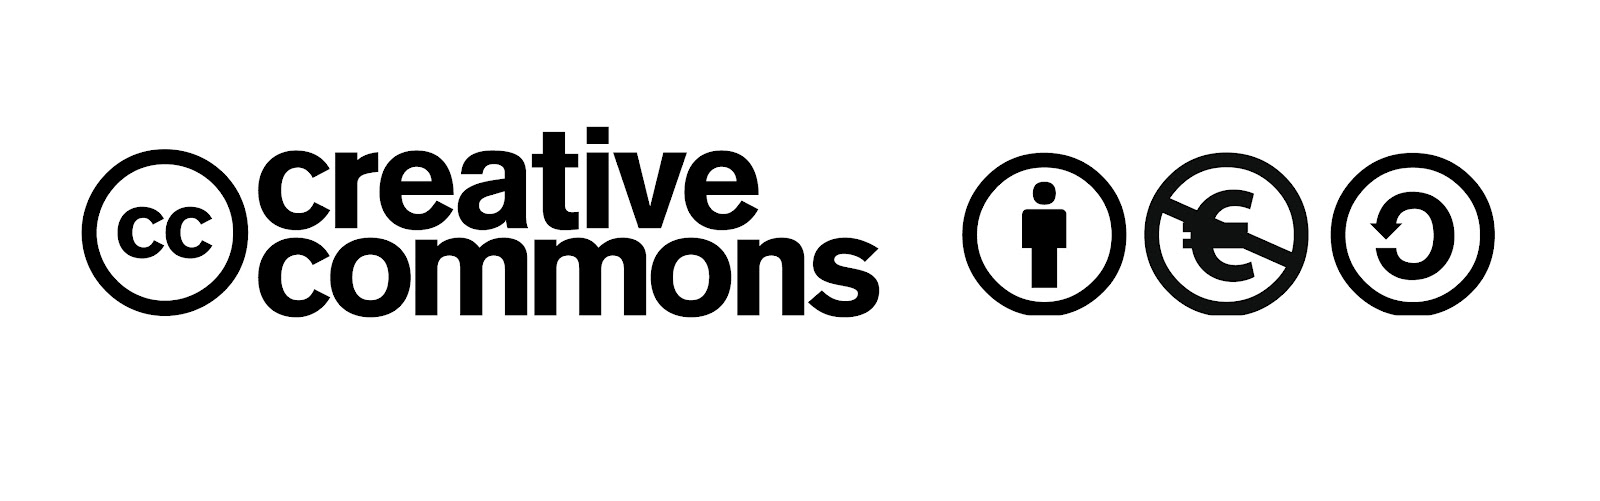 Creative commons сайты. Креатив комментс это. КК креатив Коммонс. Тюмень Creative Commons. Подкаст Лаб зас.